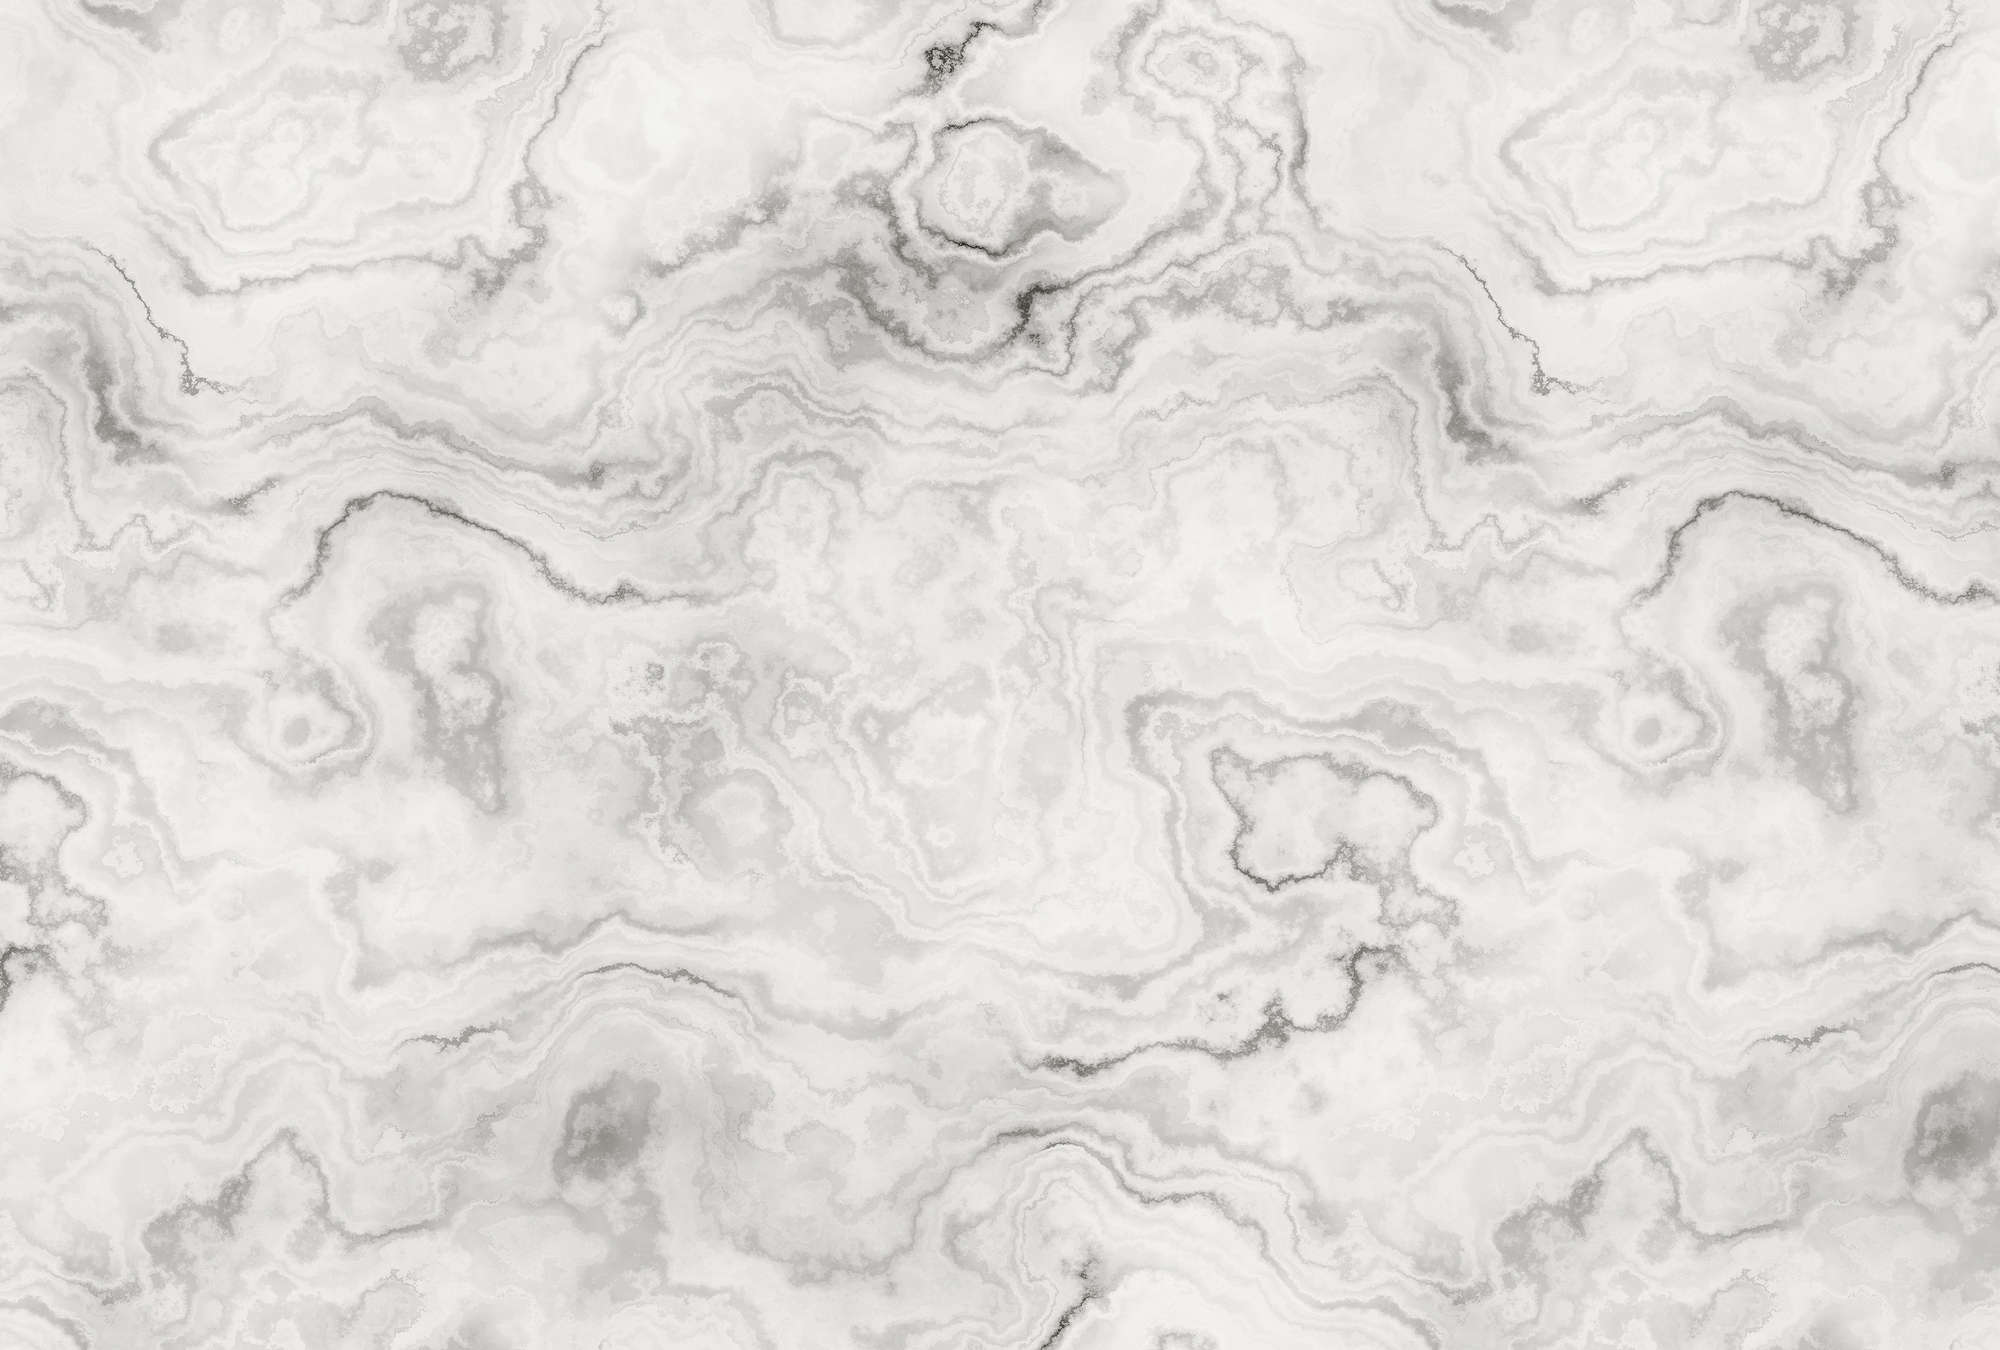             Carrara 1 - Elegant marble-look wallpaper - grey, white | mother-of-pearl smooth fleece
        